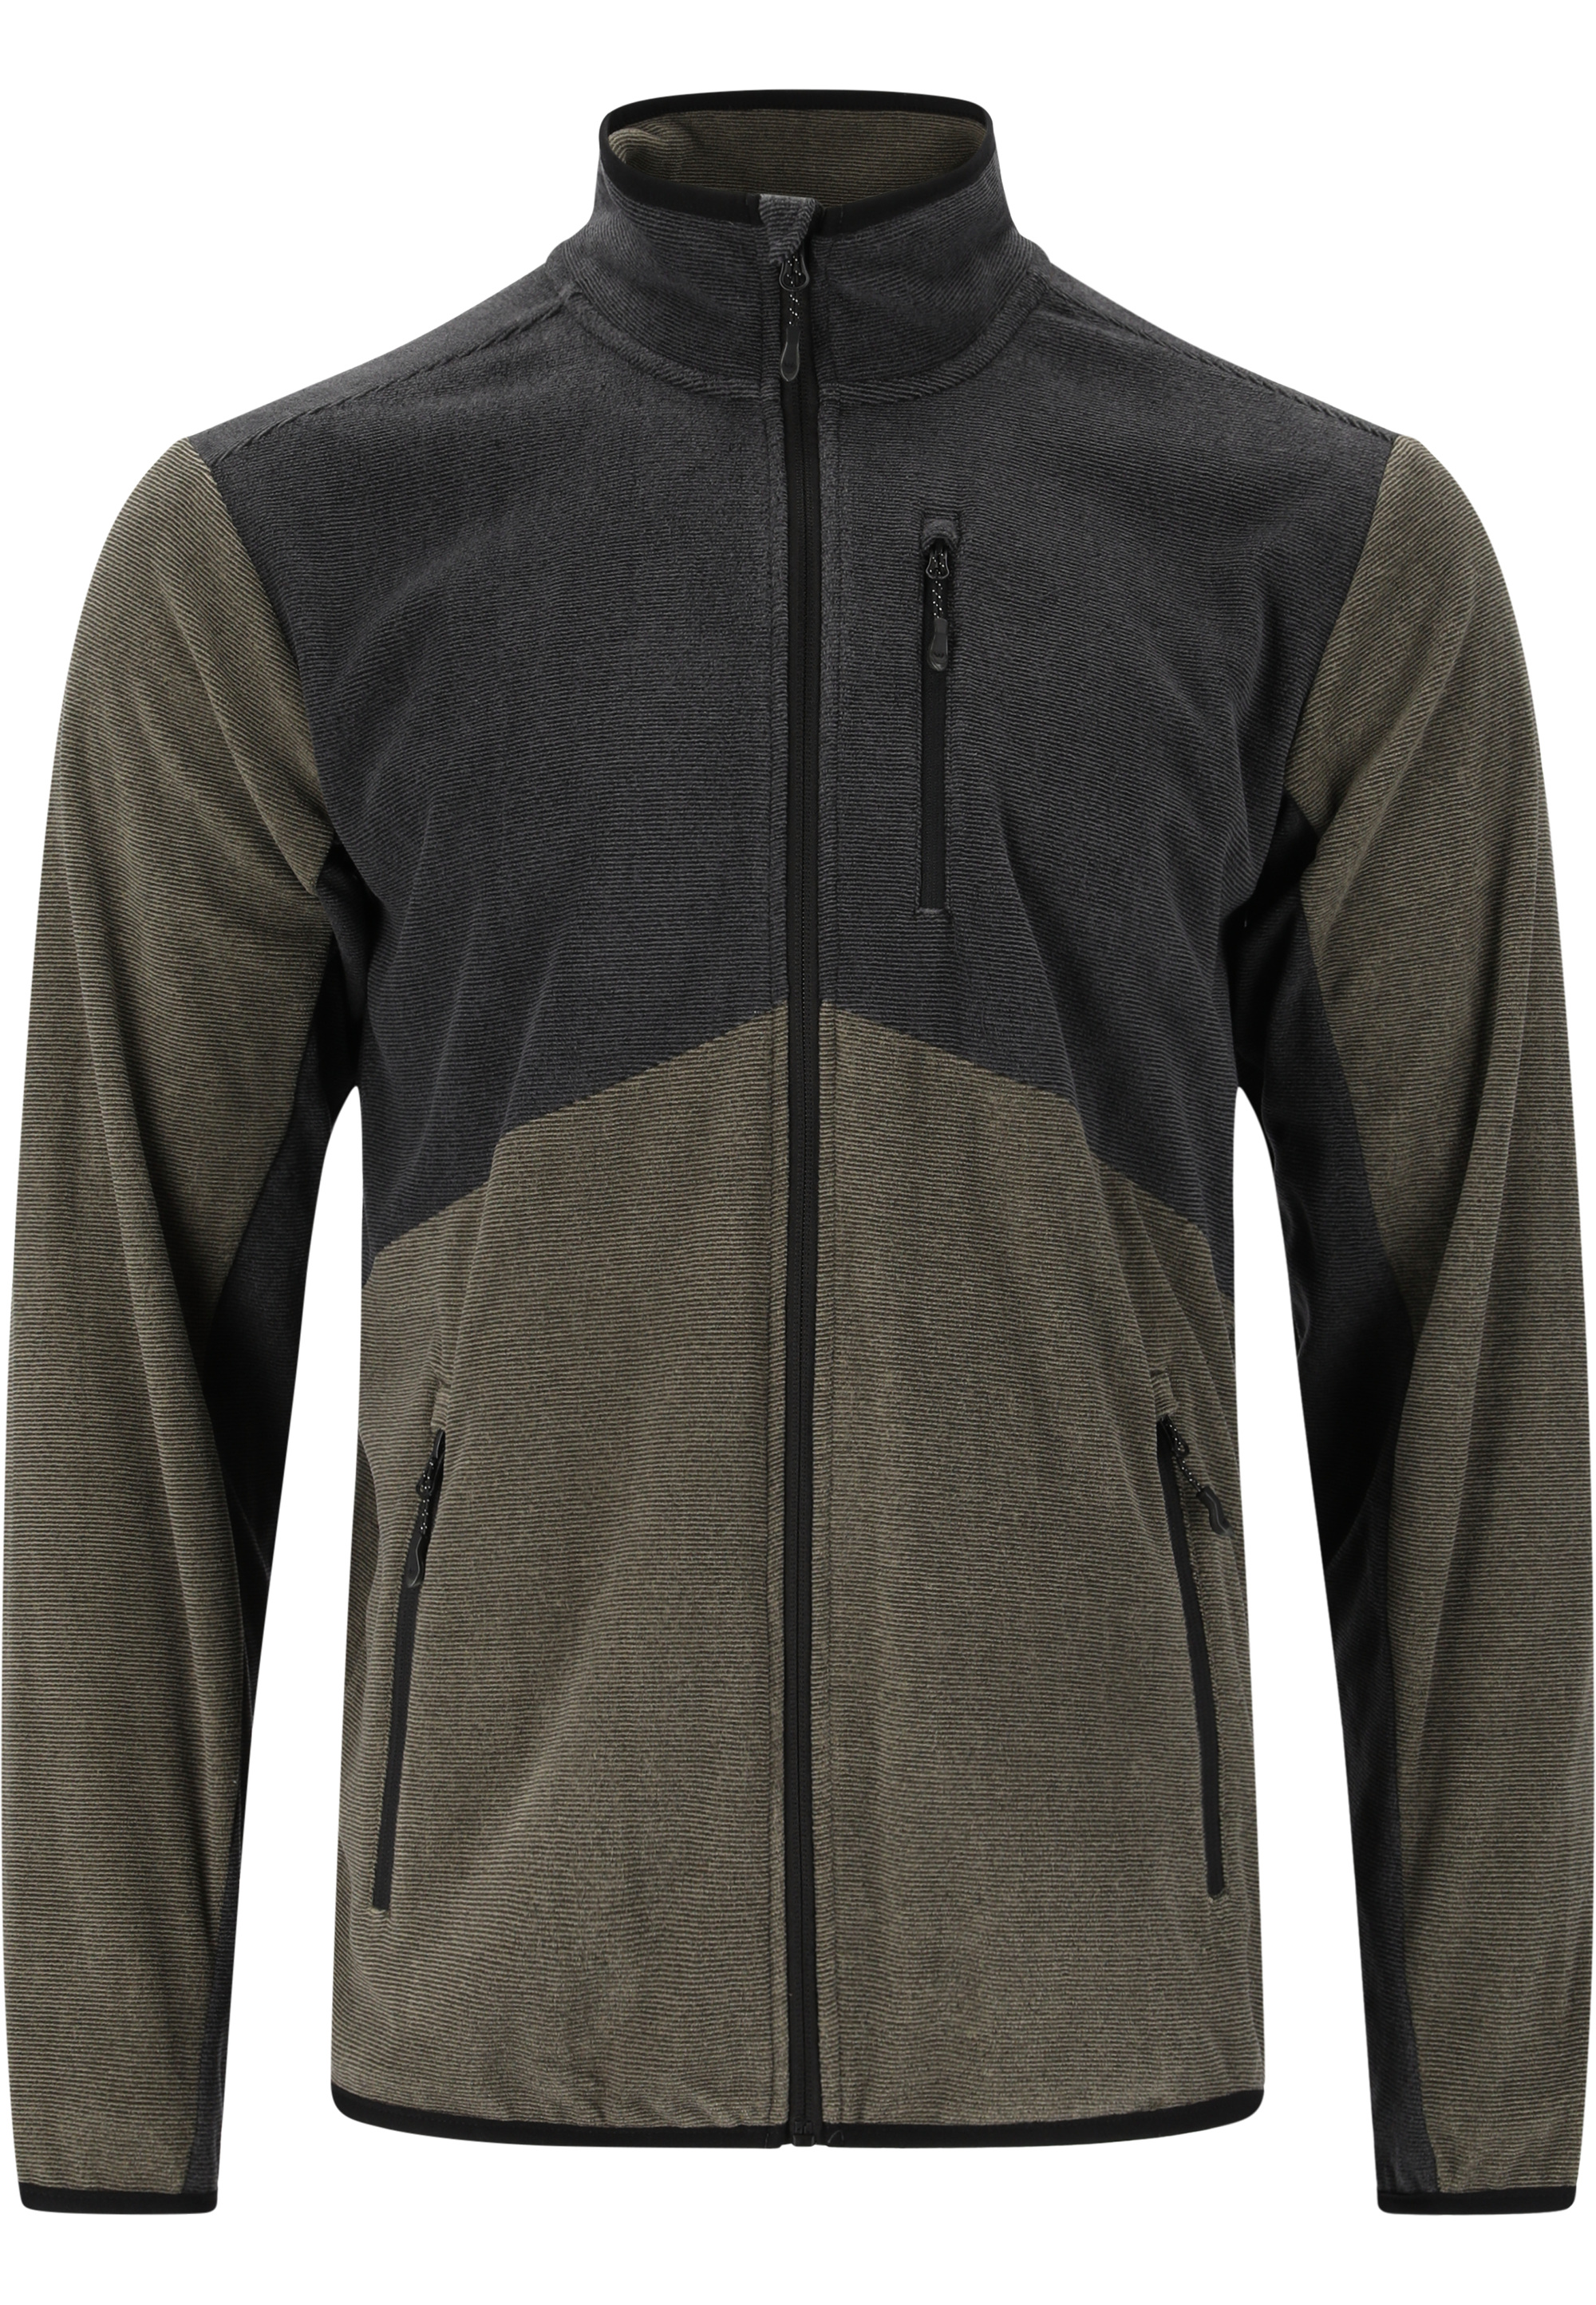 Флисовая куртка Whistler Greyson, цвет 5056 Tarmac куртка софтшелл whistler covina цвет 5056 tarmac